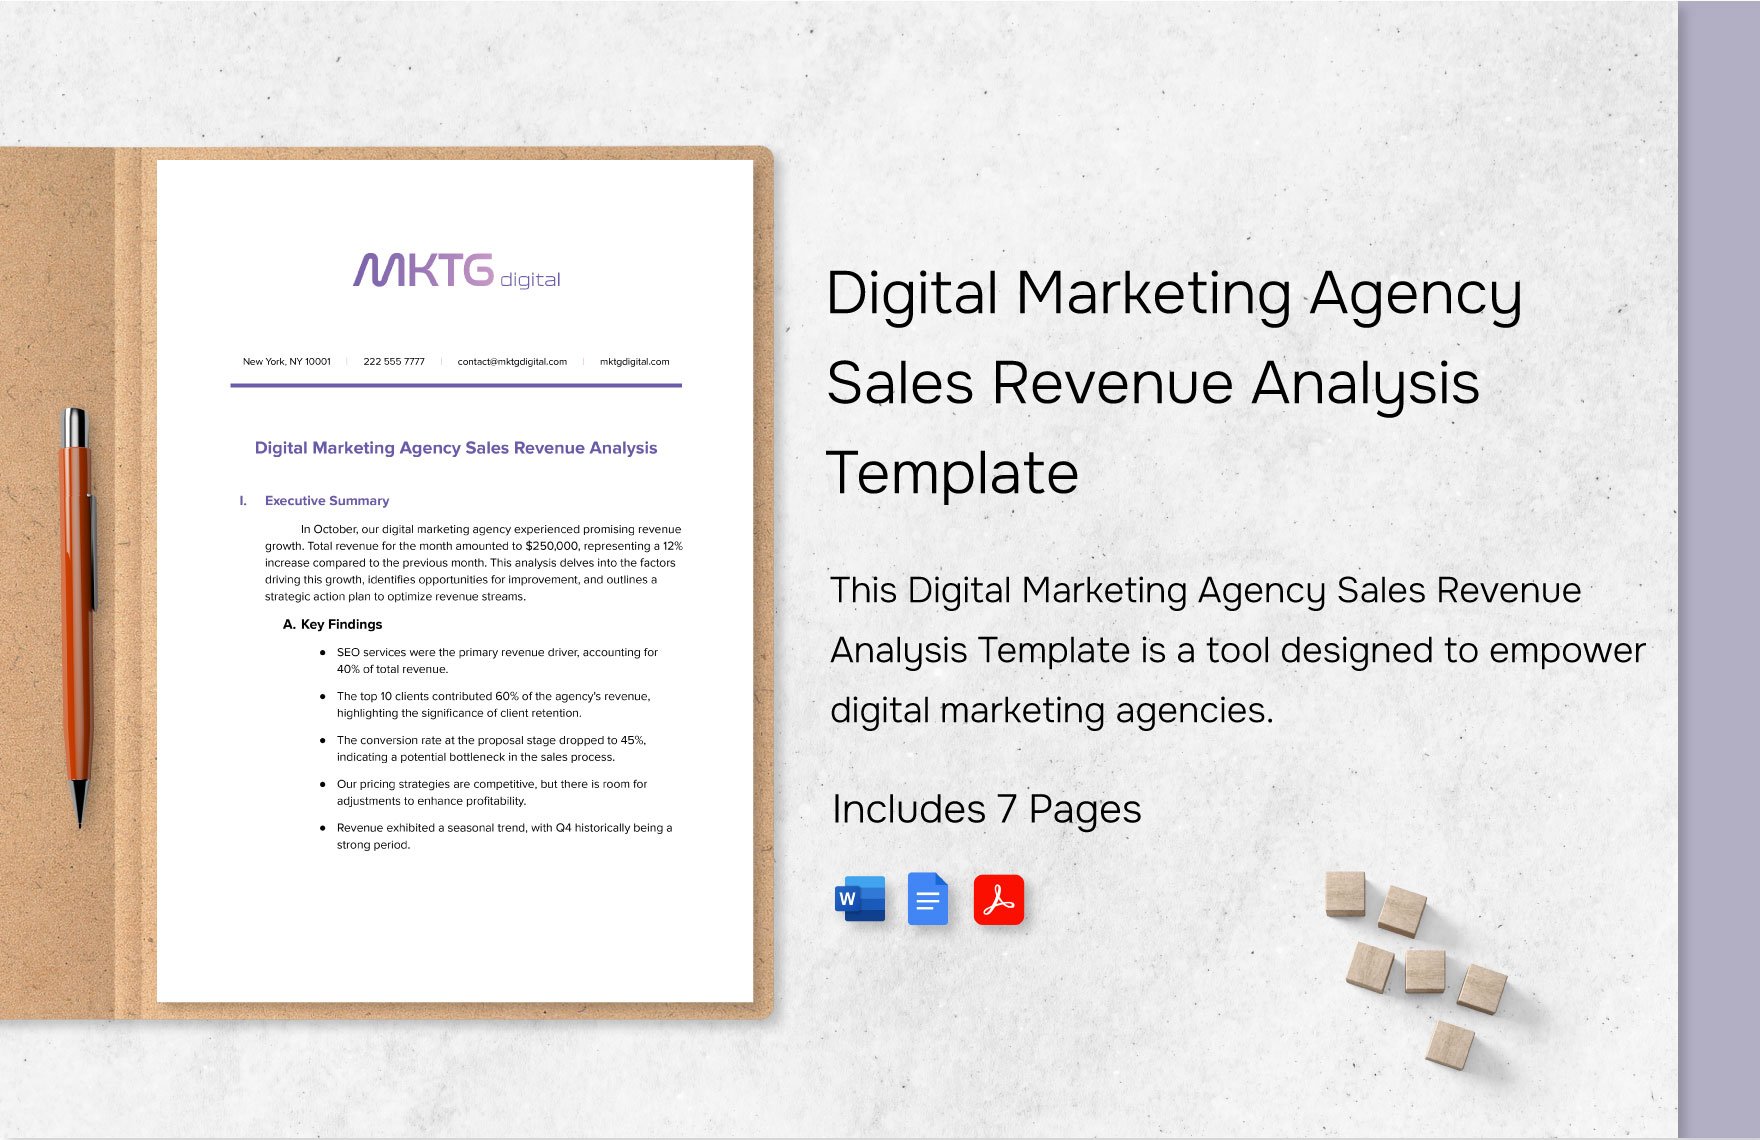 Digital Marketing Agency Sales Revenue Analysis Template